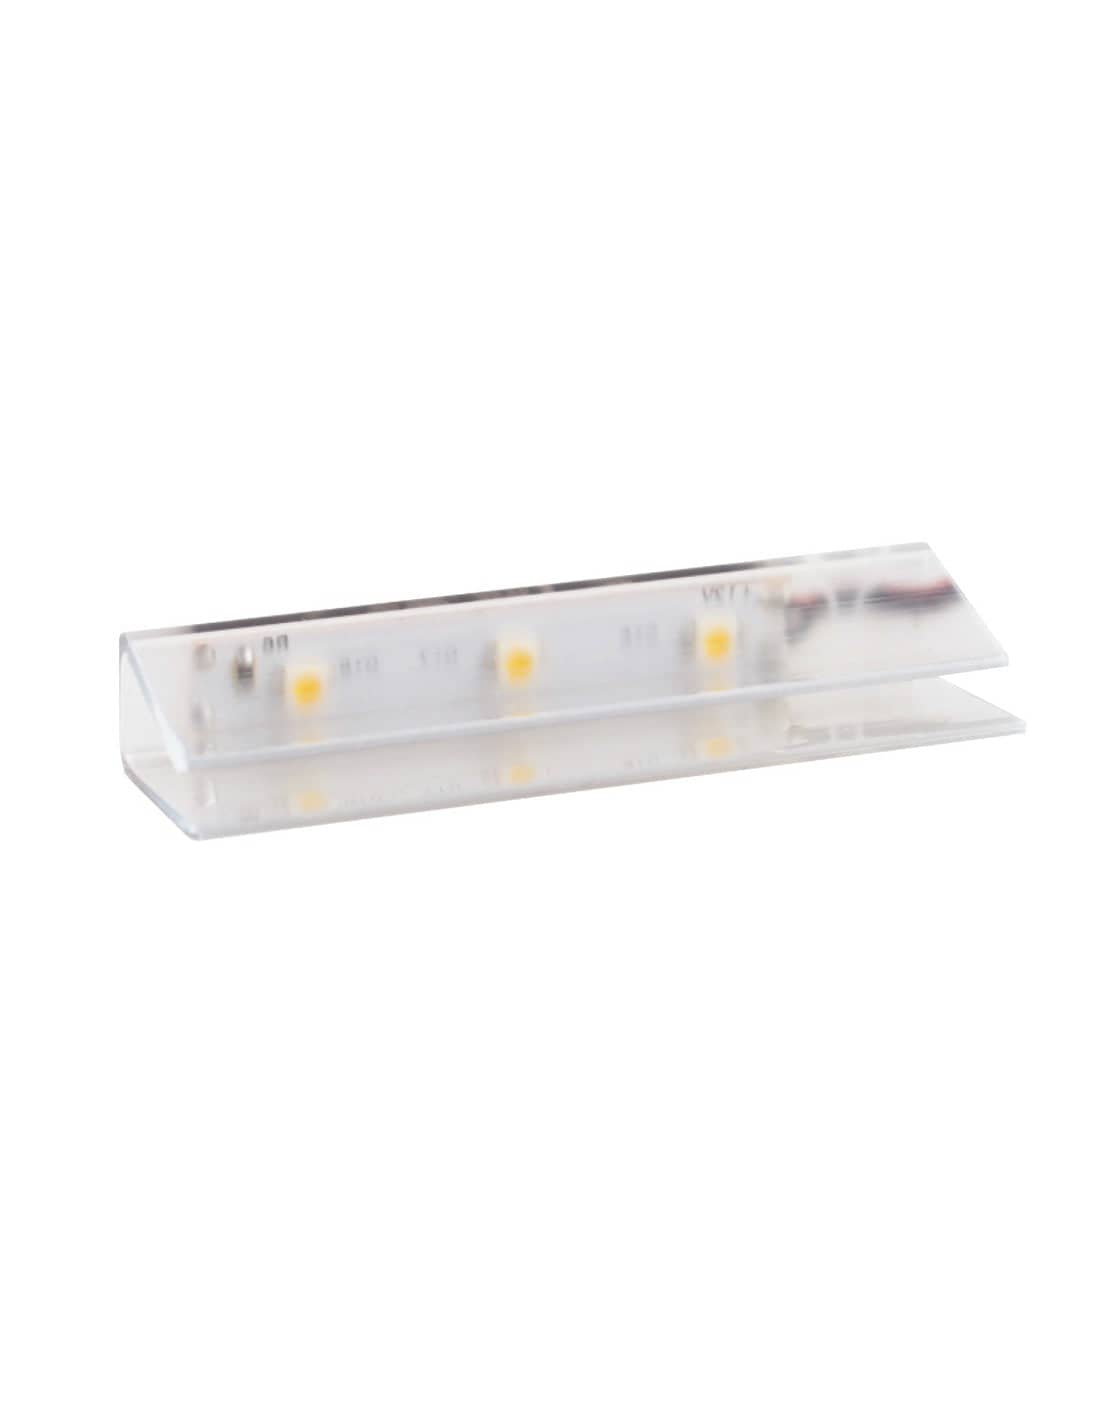 KLIPS - LED Plastic clip 0.25W Warm White 30K   KLIPS-P-3528-30K-01